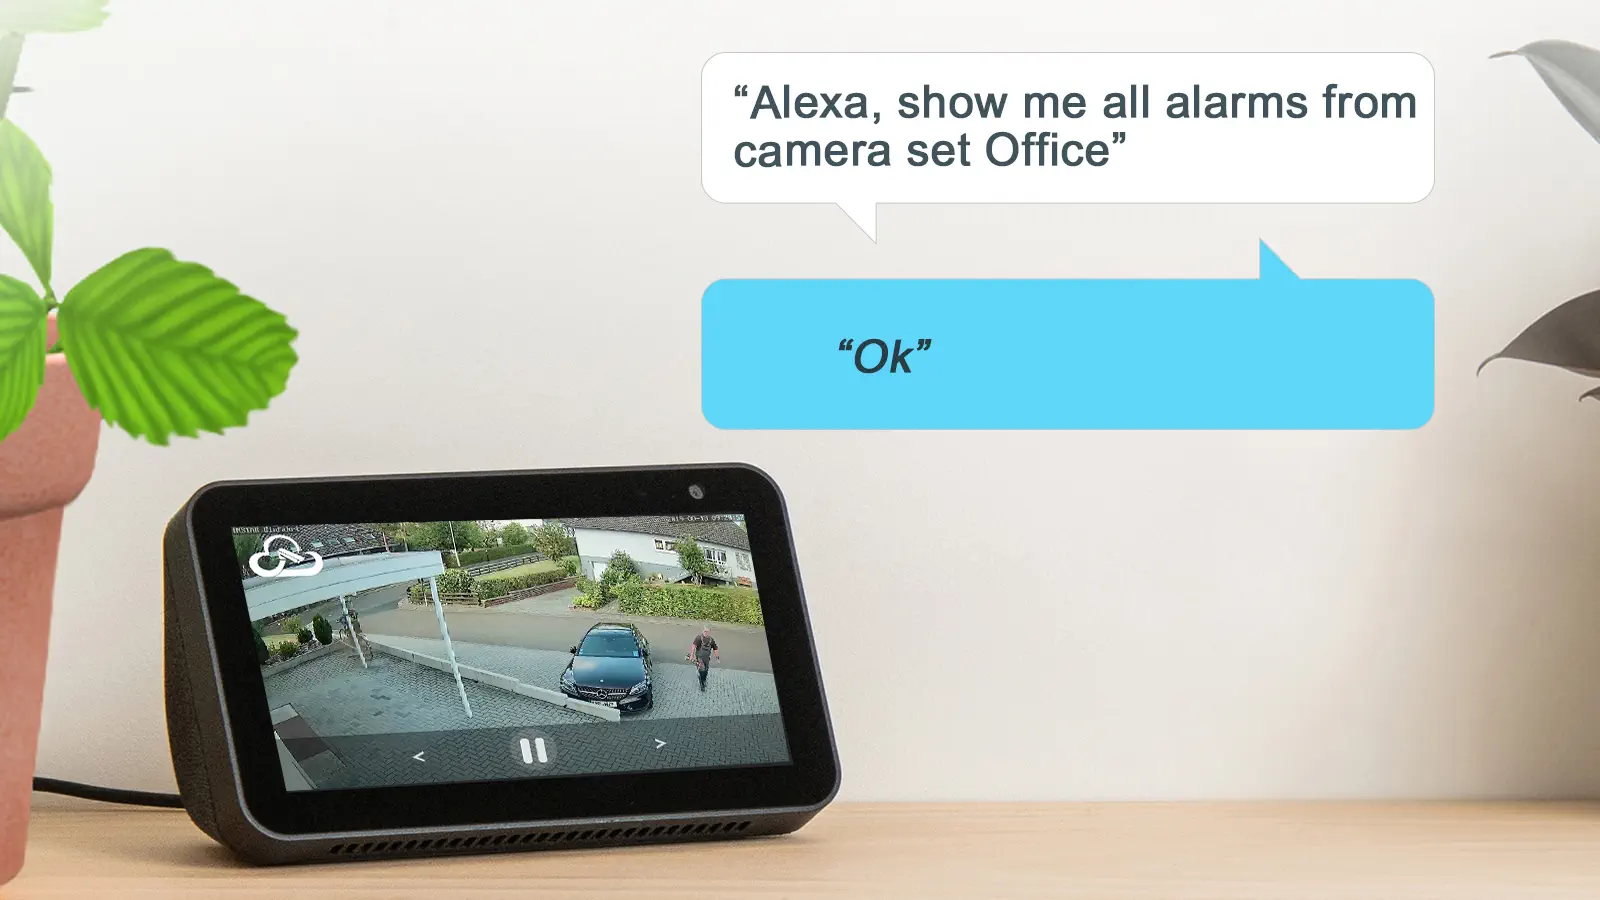 Alexa Play alarm videos from a specific camera set